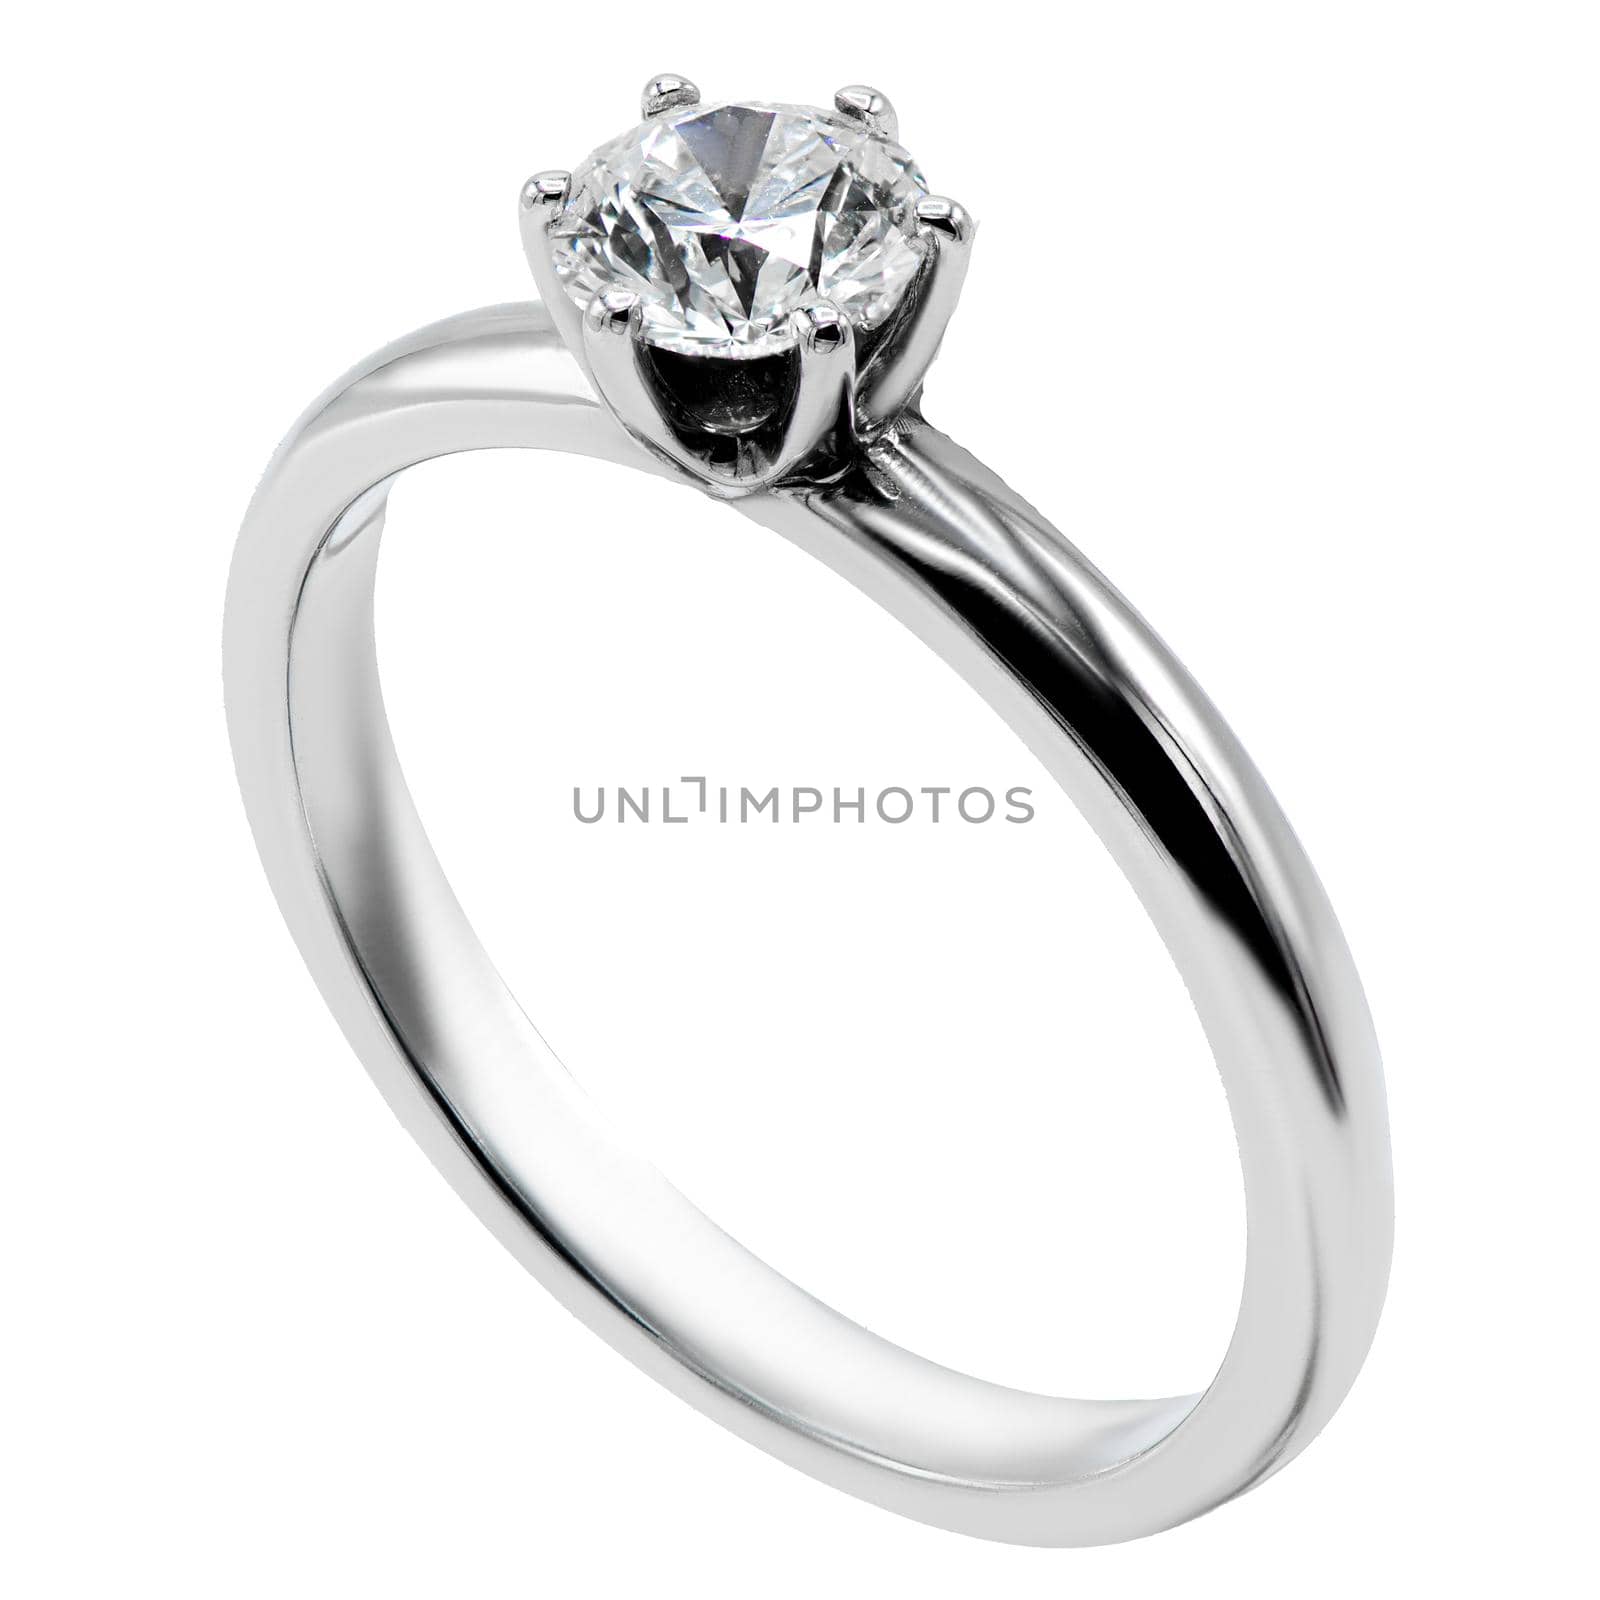 Engagement diamond wedding ring with big gem isolated on white background by MKolesnikov